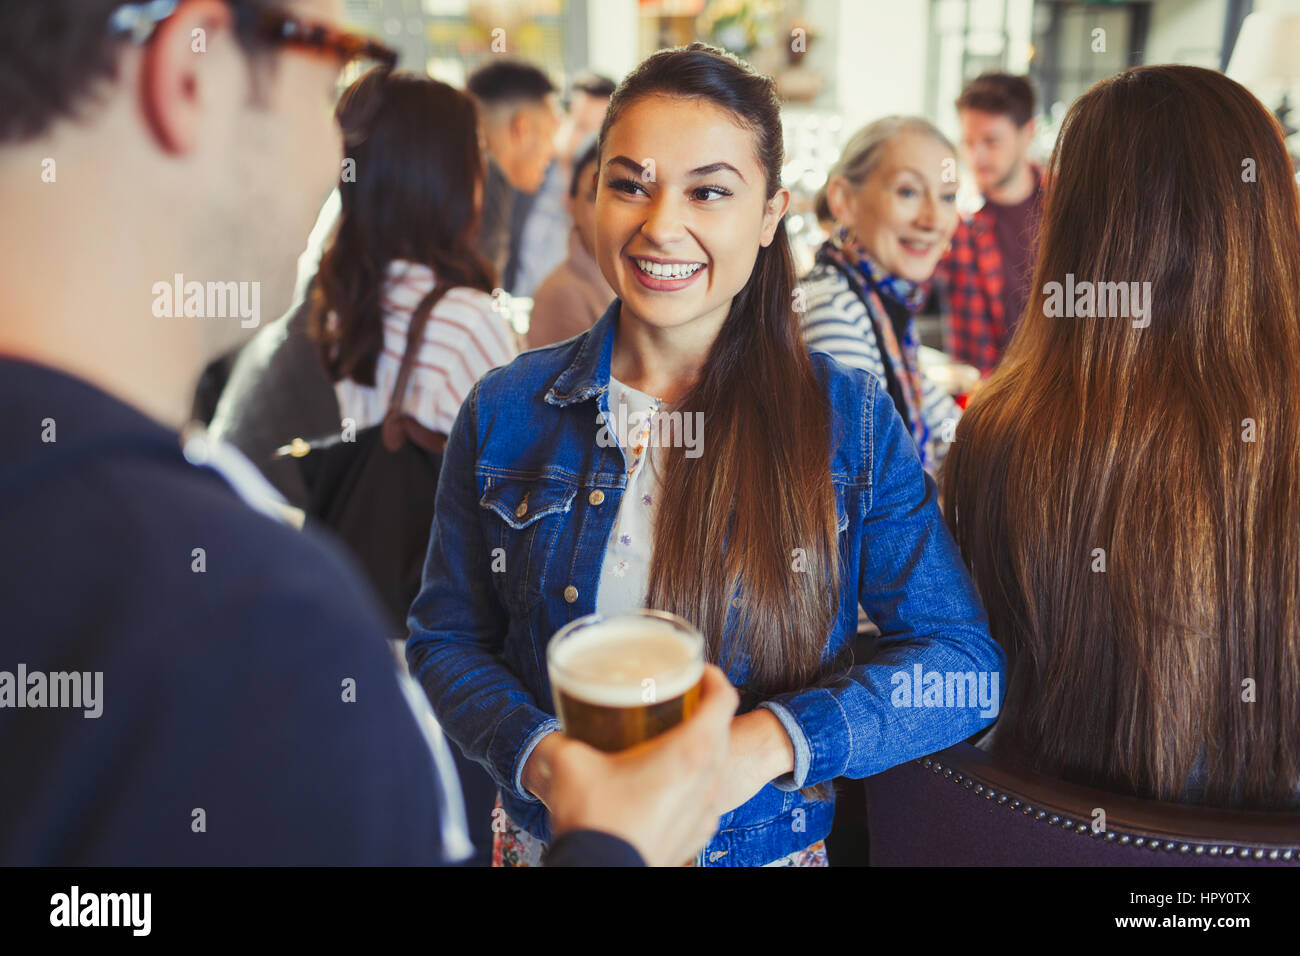 Man and woman drinking beer and talking at bar Stock Photo